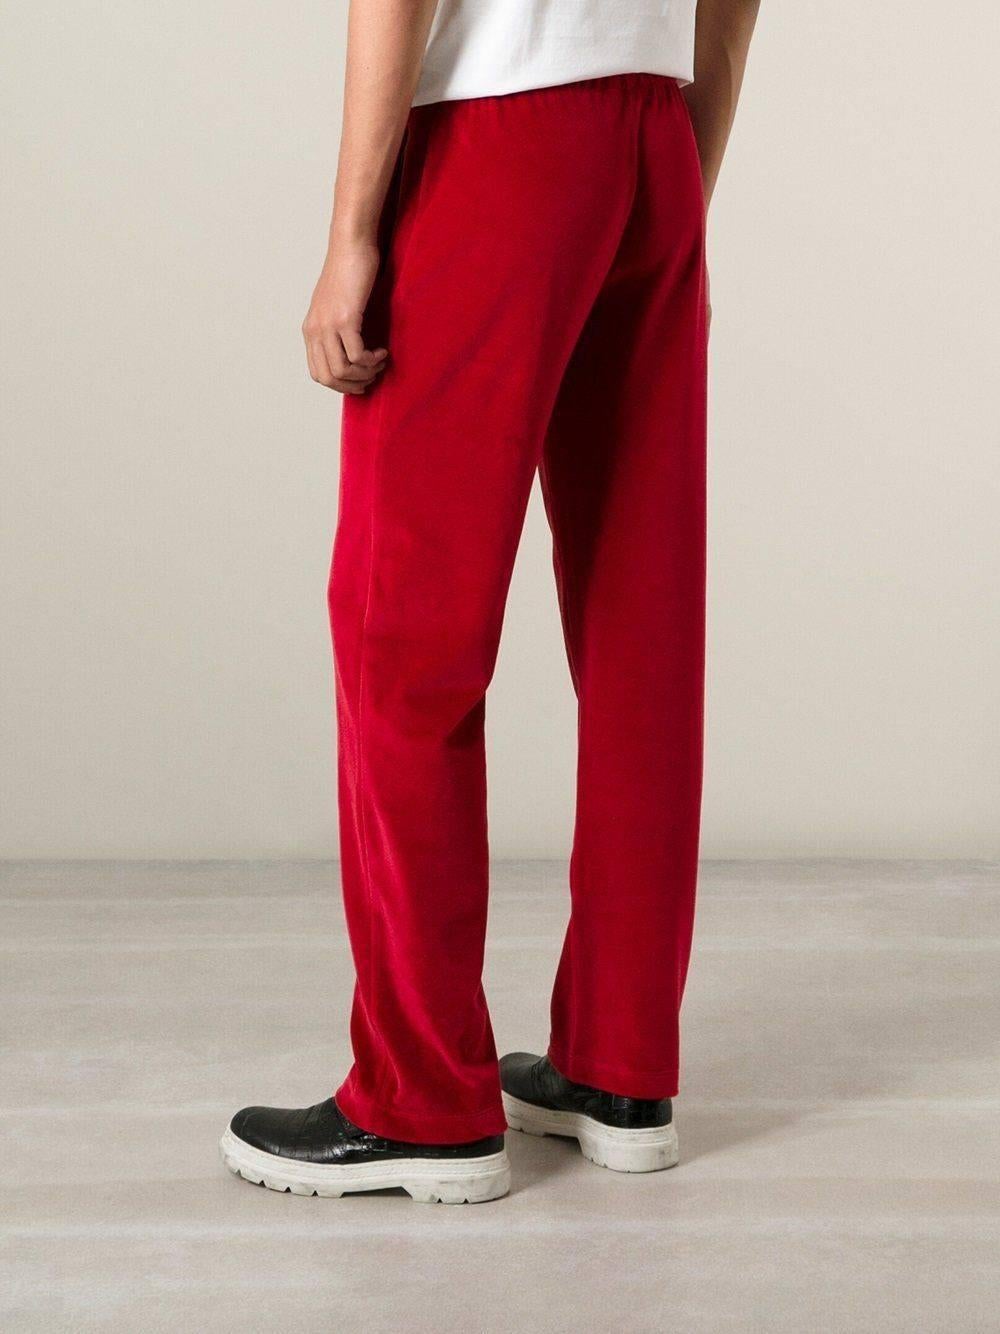 New Versace Medusa Men's Red Velvet Sweatpants Black Leather Trim sizes M, L 2